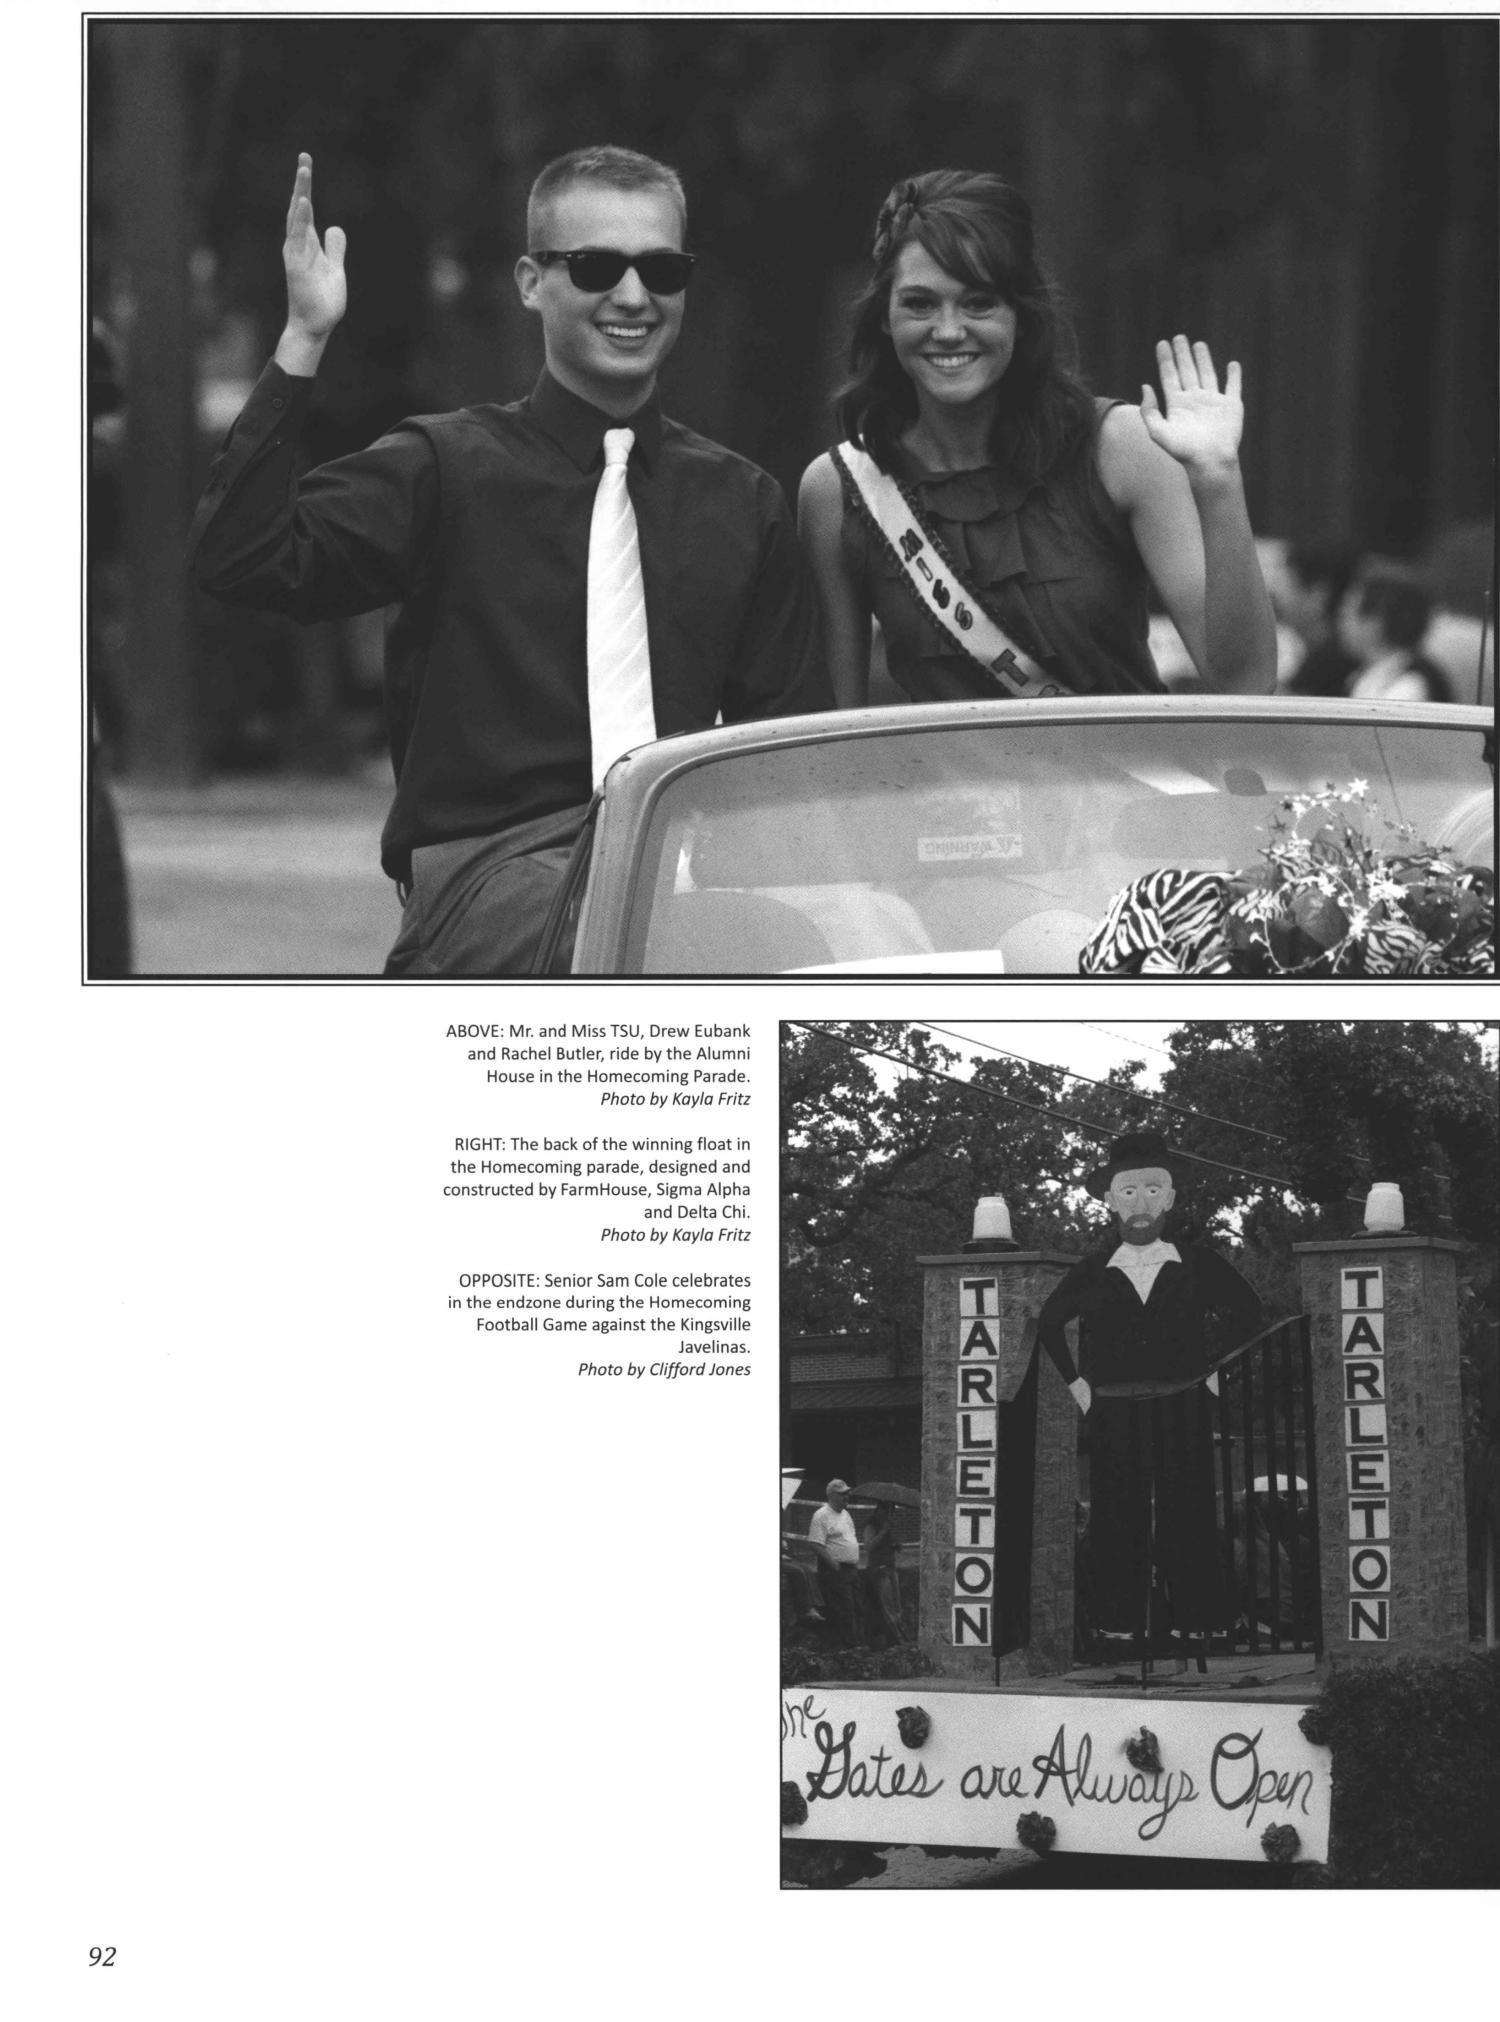 The Grassburr, Yearbook of Tarleton State University, 2011
                                                
                                                    92
                                                